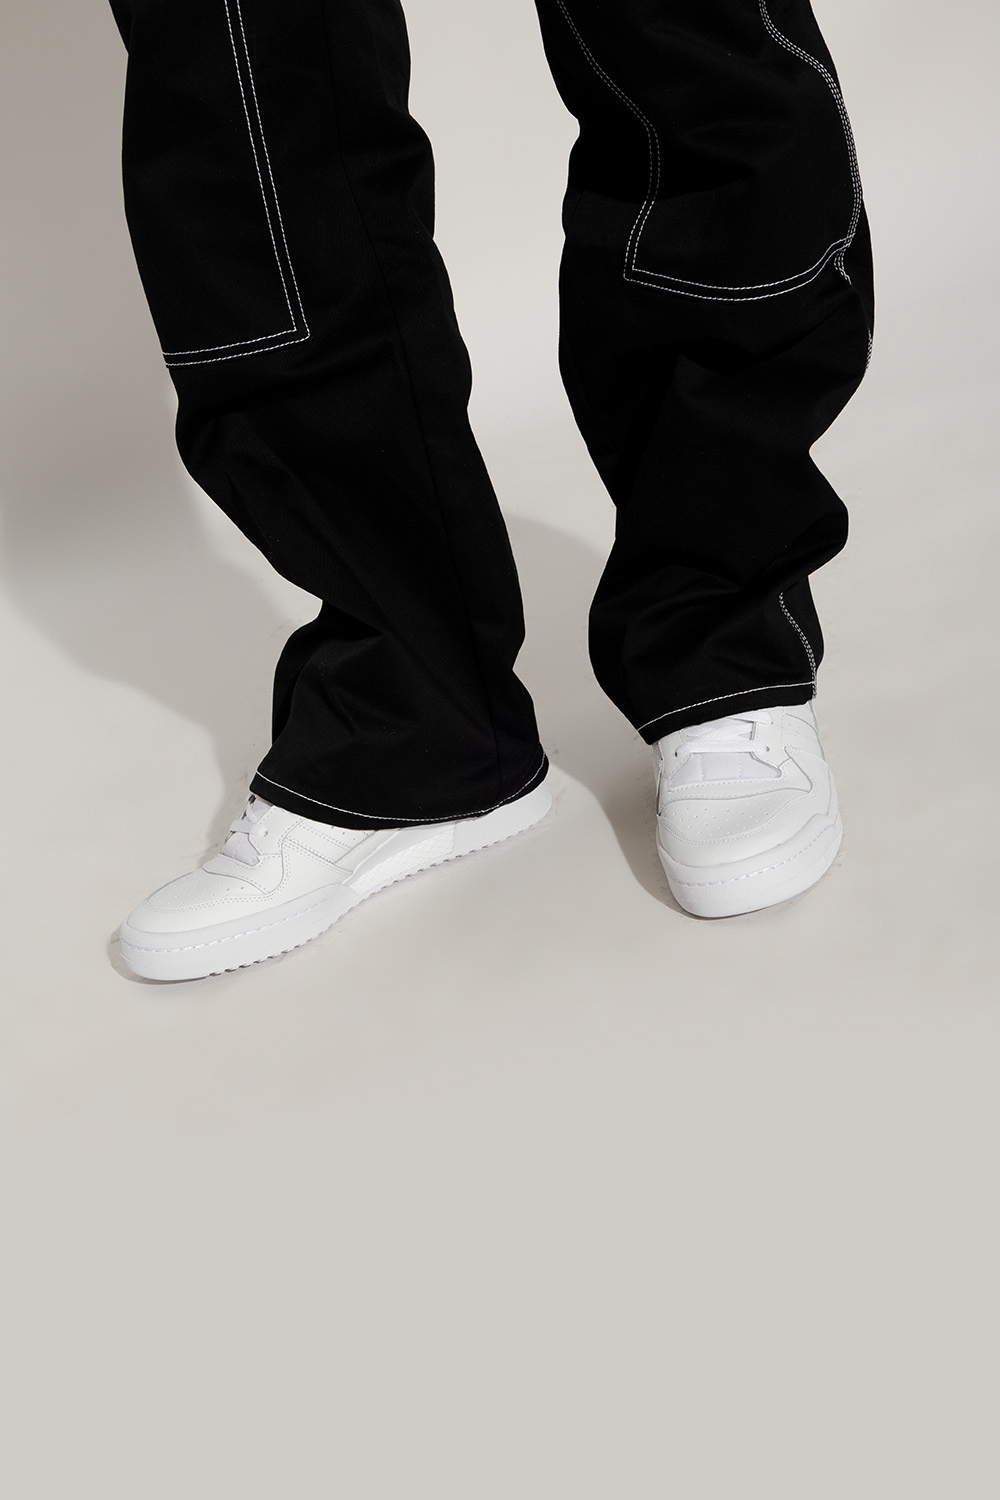 adidas customized Originals ‘FORUM LOW’ sneakers